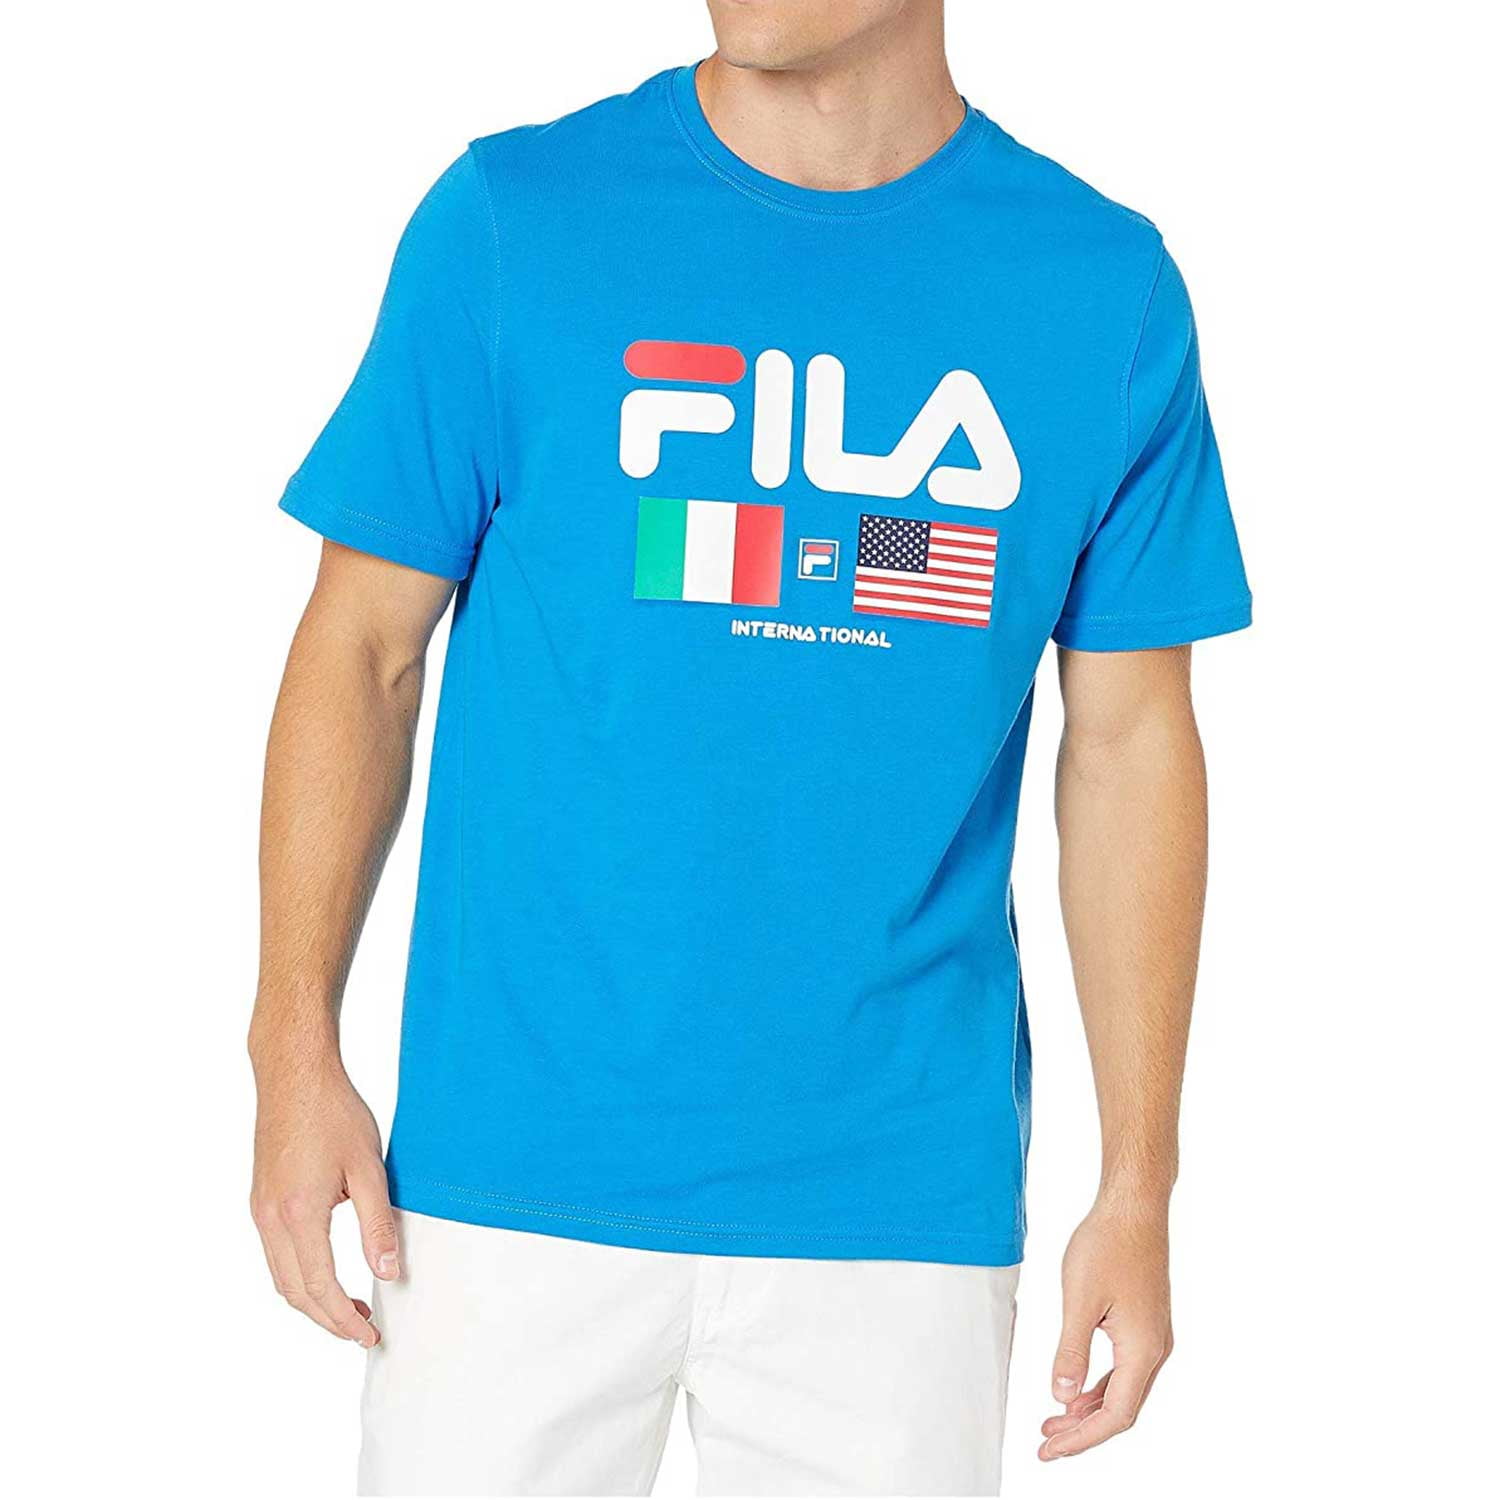 Fila T-Shirt Direct Blue lm913786-916 Walmart.com